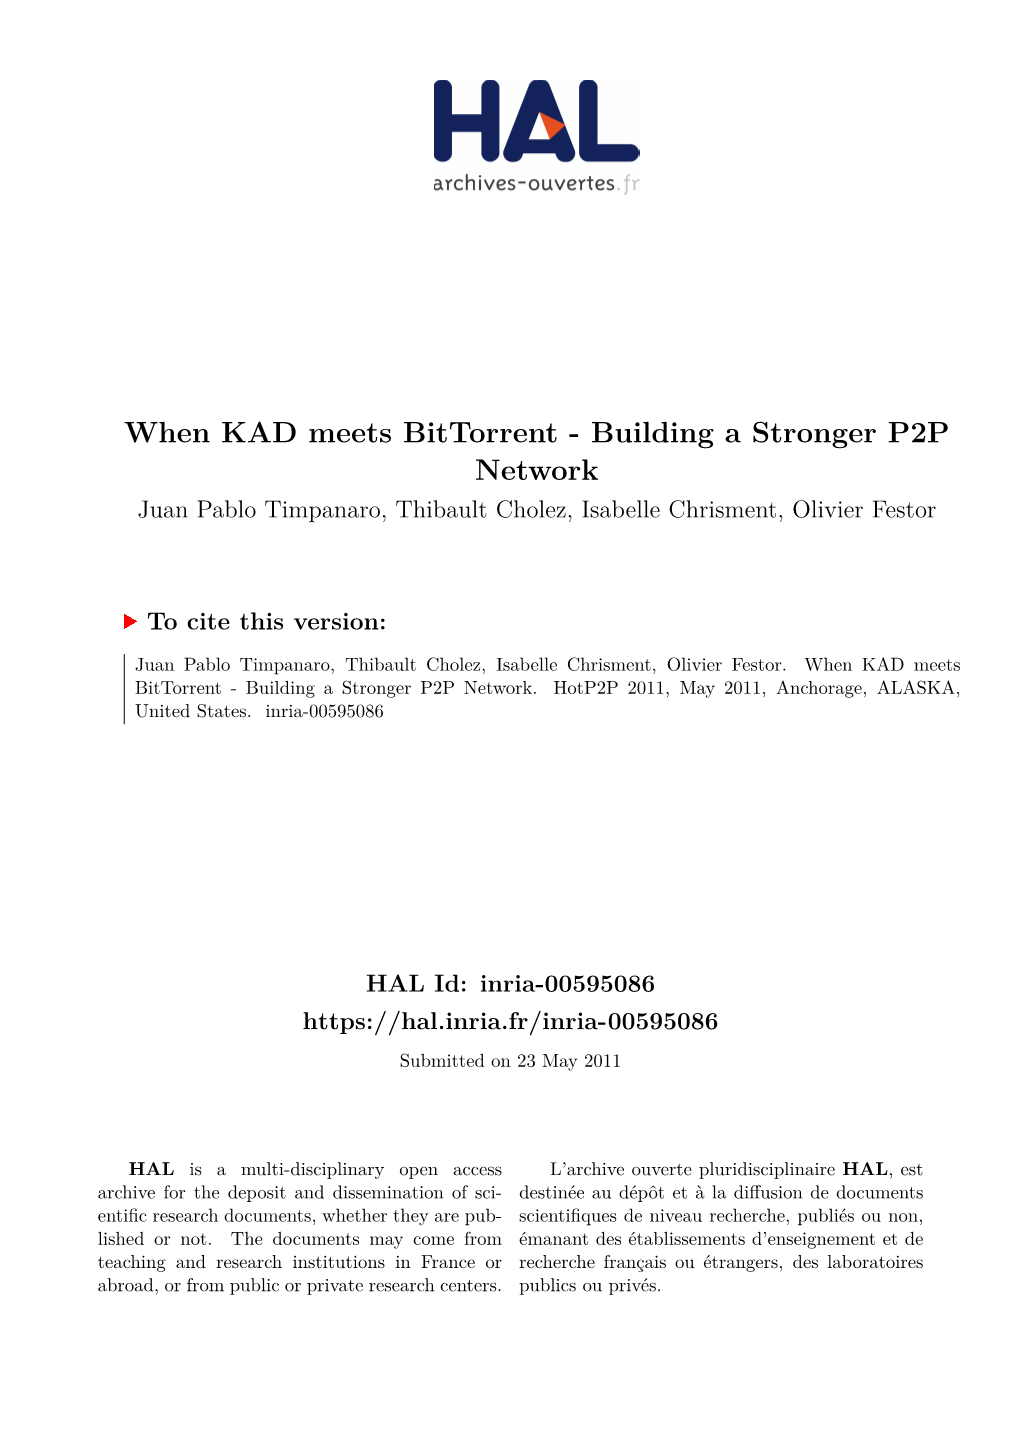 When KAD Meets Bittorrent - Building a Stronger P2P Network Juan Pablo Timpanaro, Thibault Cholez, Isabelle Chrisment, Olivier Festor